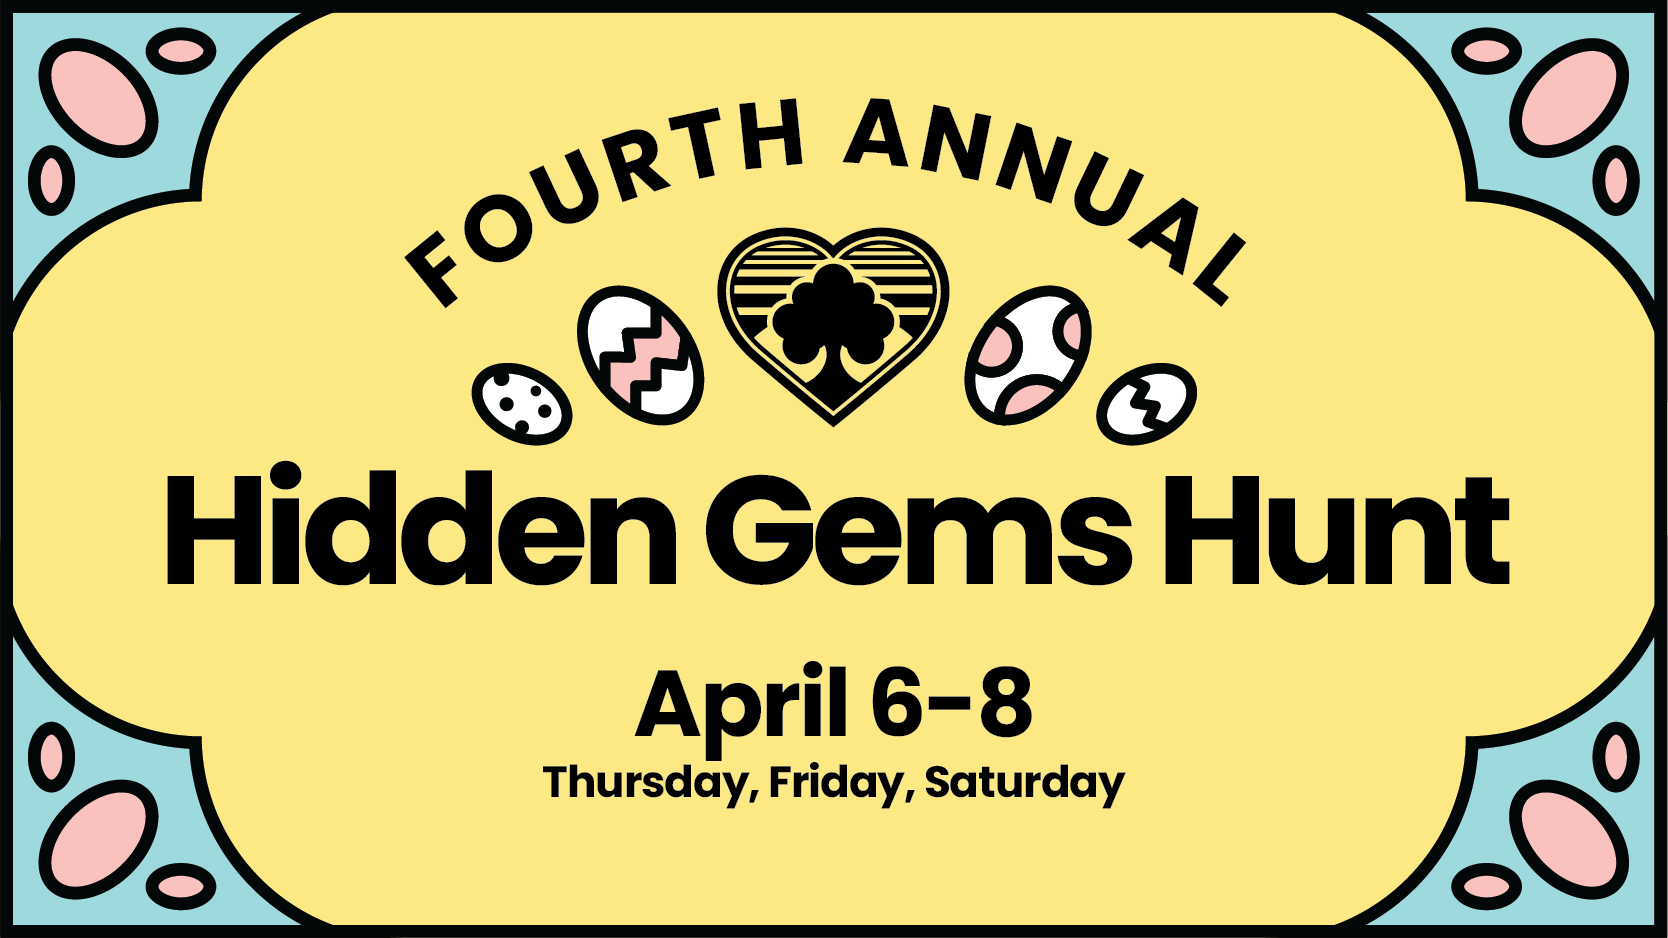 The 4th Annual Hidden Gems Hunt